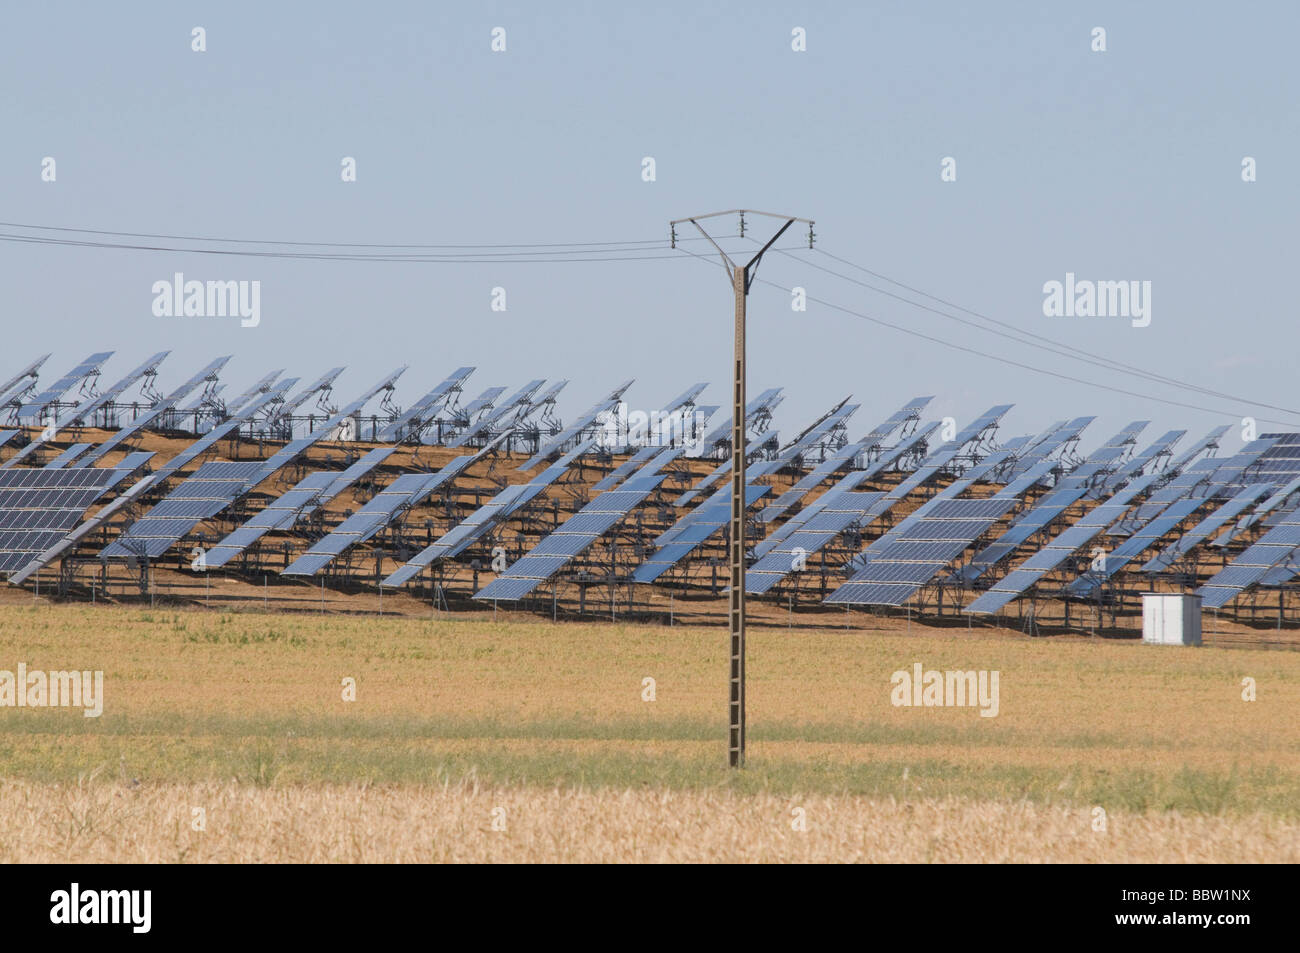 Solar power station in Spain, Zamora region Stock Photo